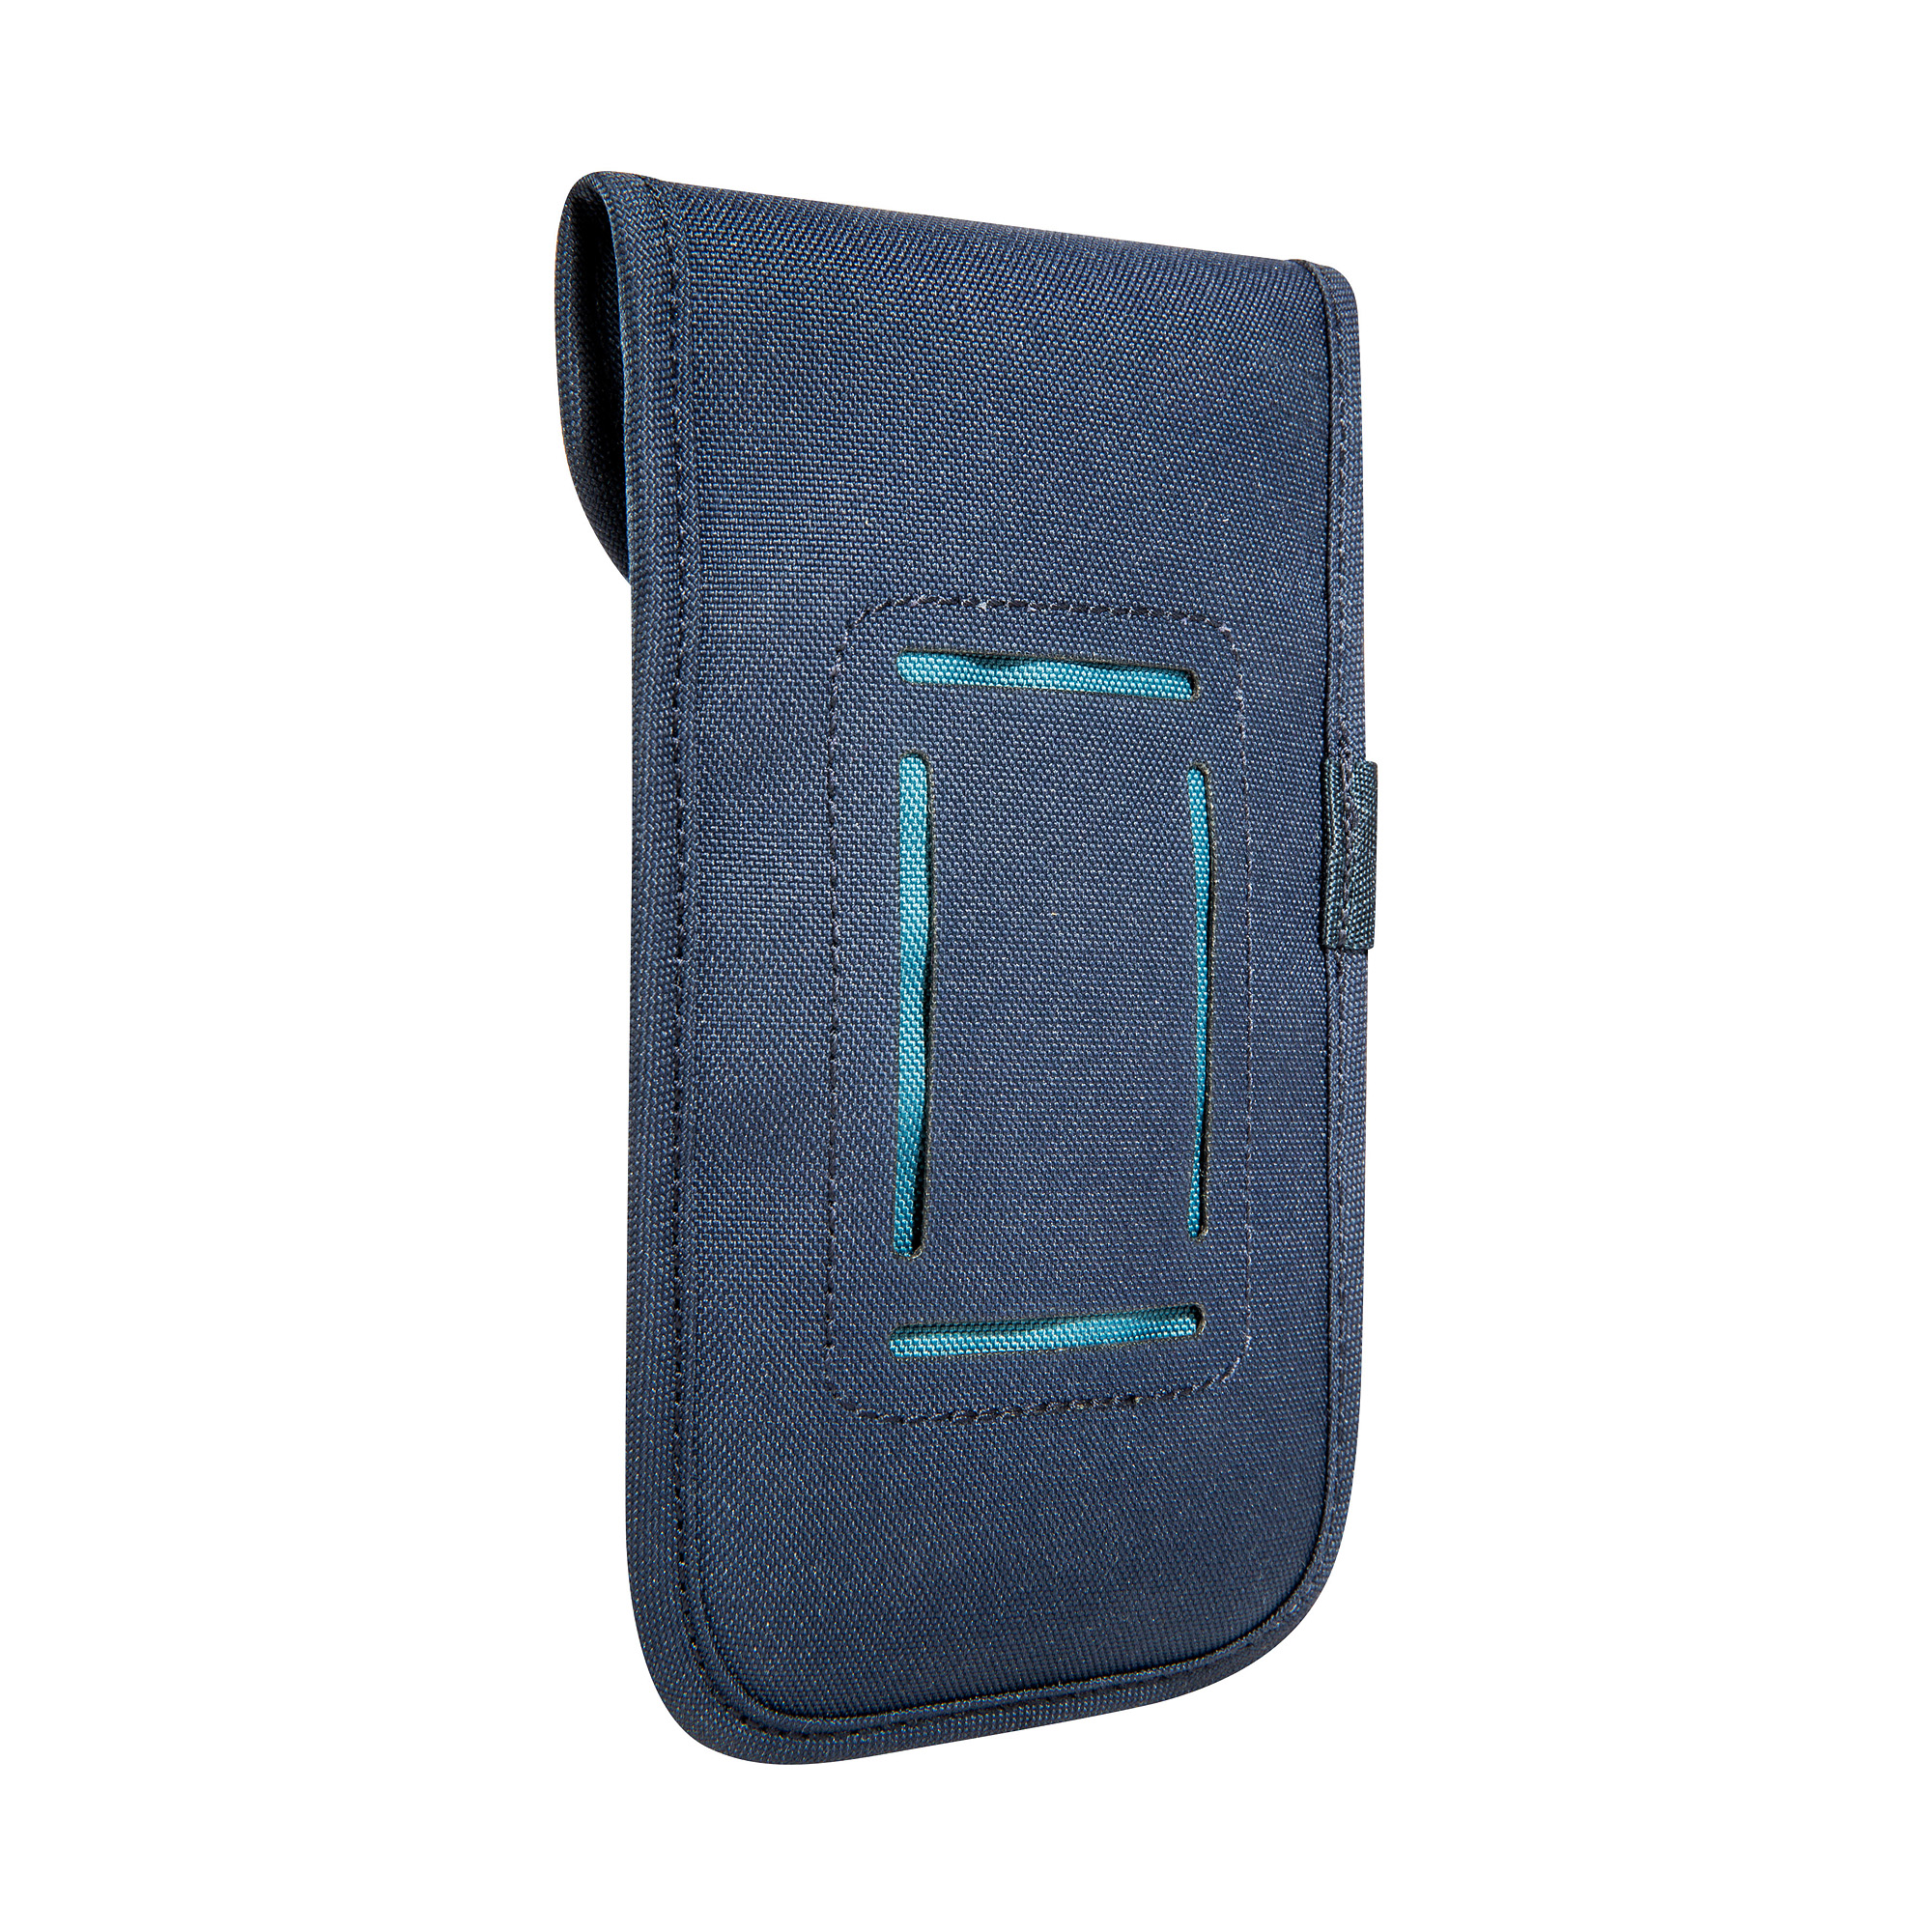 Tatonka Smartphone Case L navy blau Handyhüllen 4013236336047